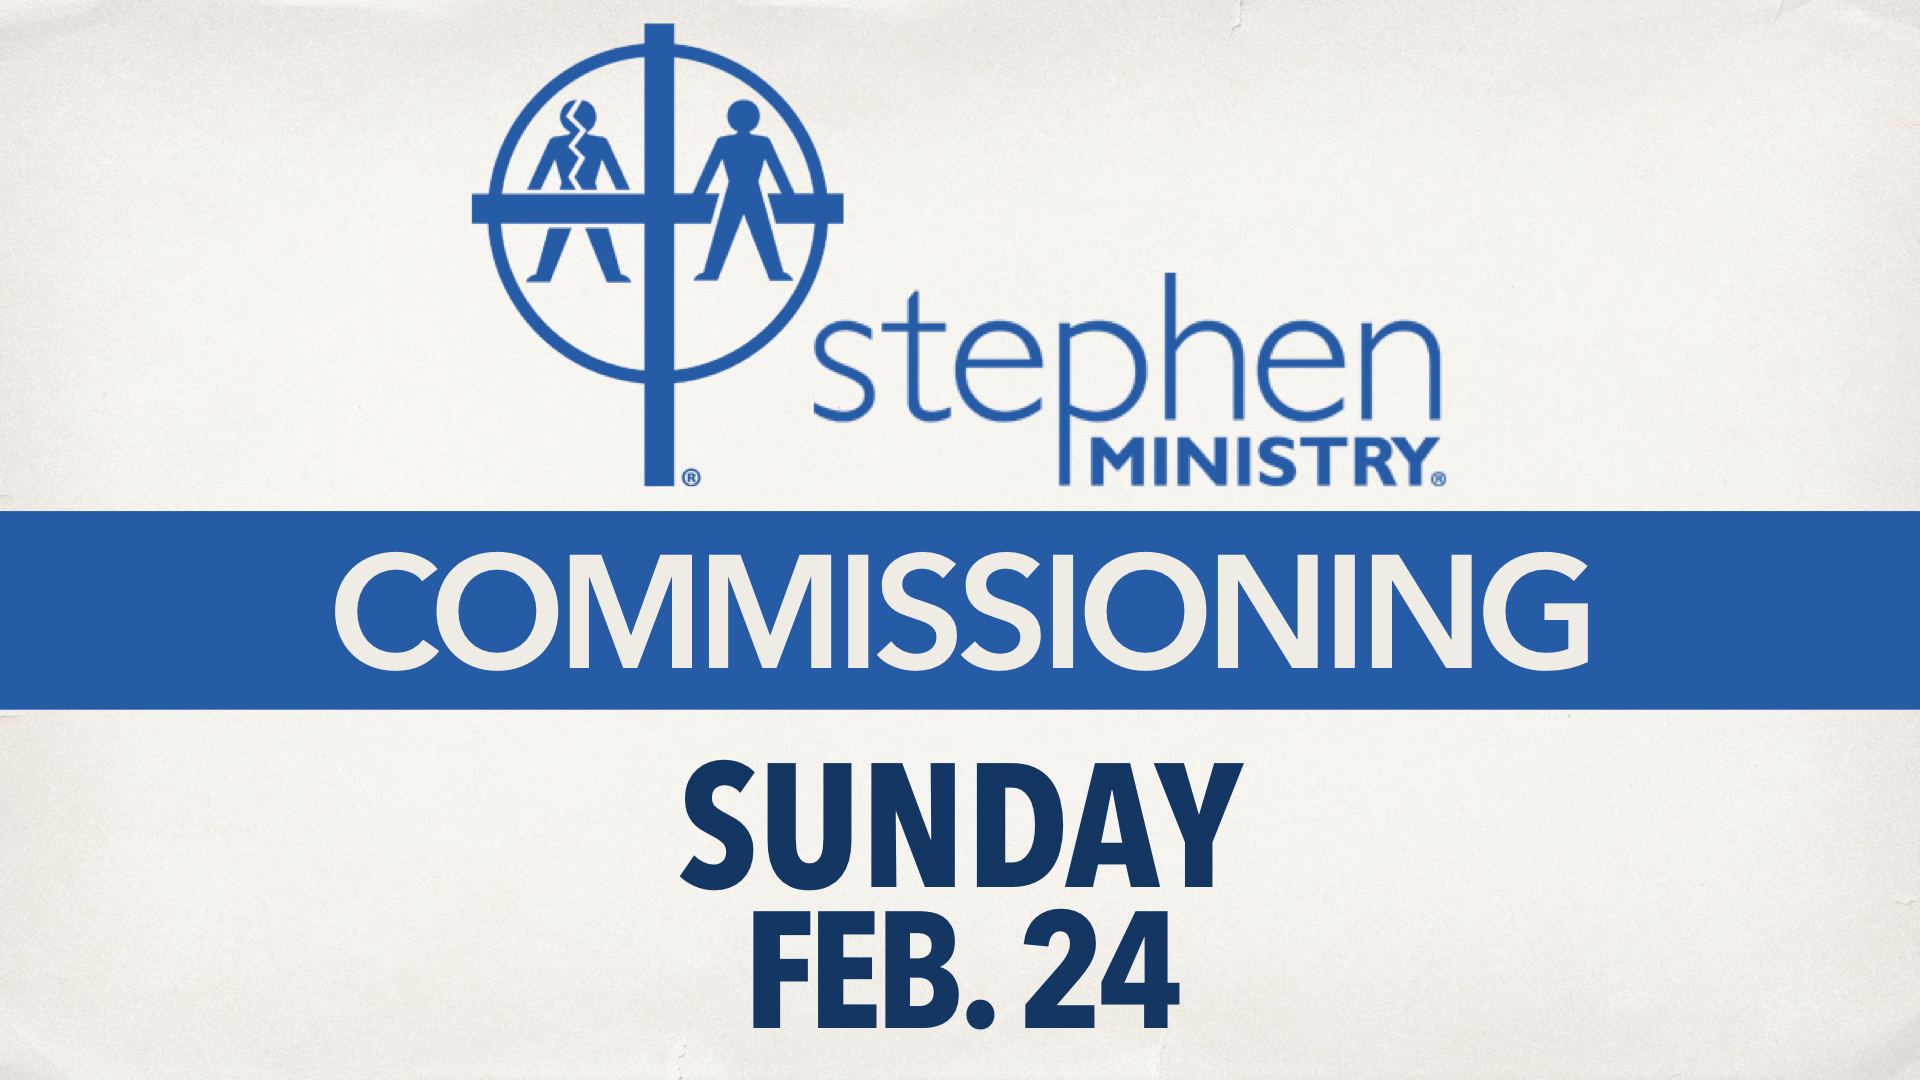 Stephen Ministry Leaders Commissioning Sunday, Feb. 24